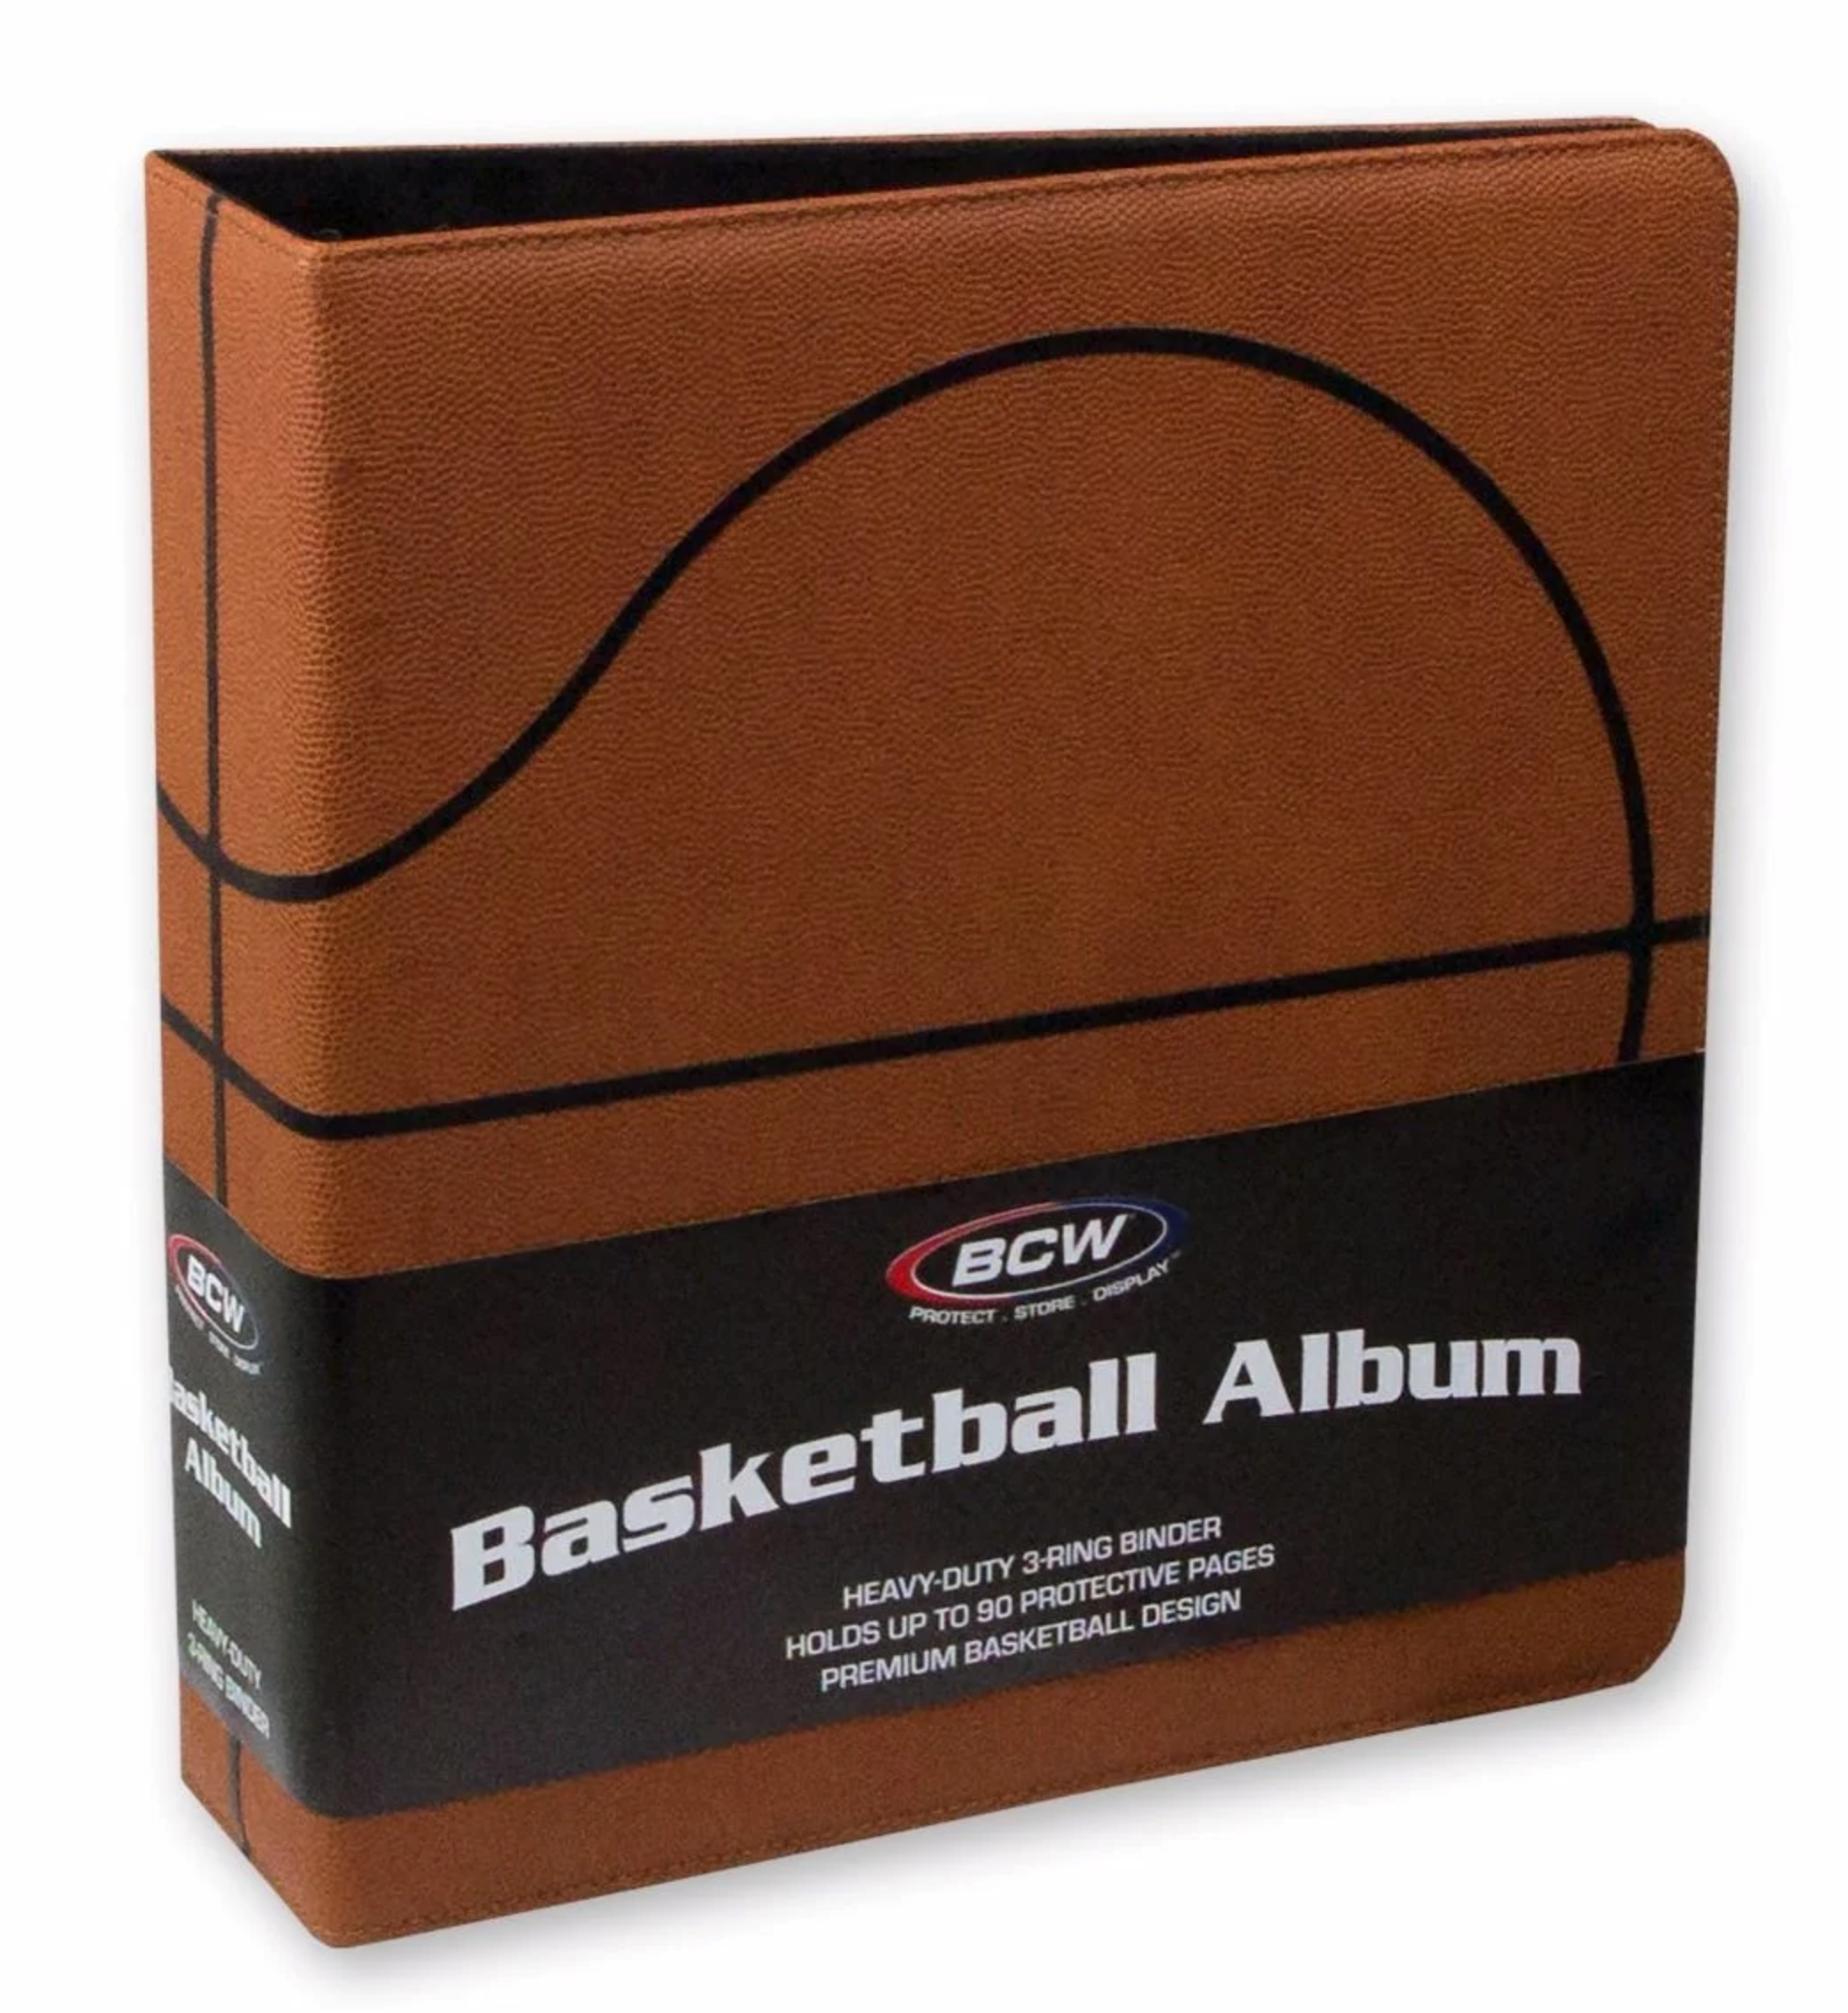 BCW Album 3" Basketball Premium - Sports Cards Norge